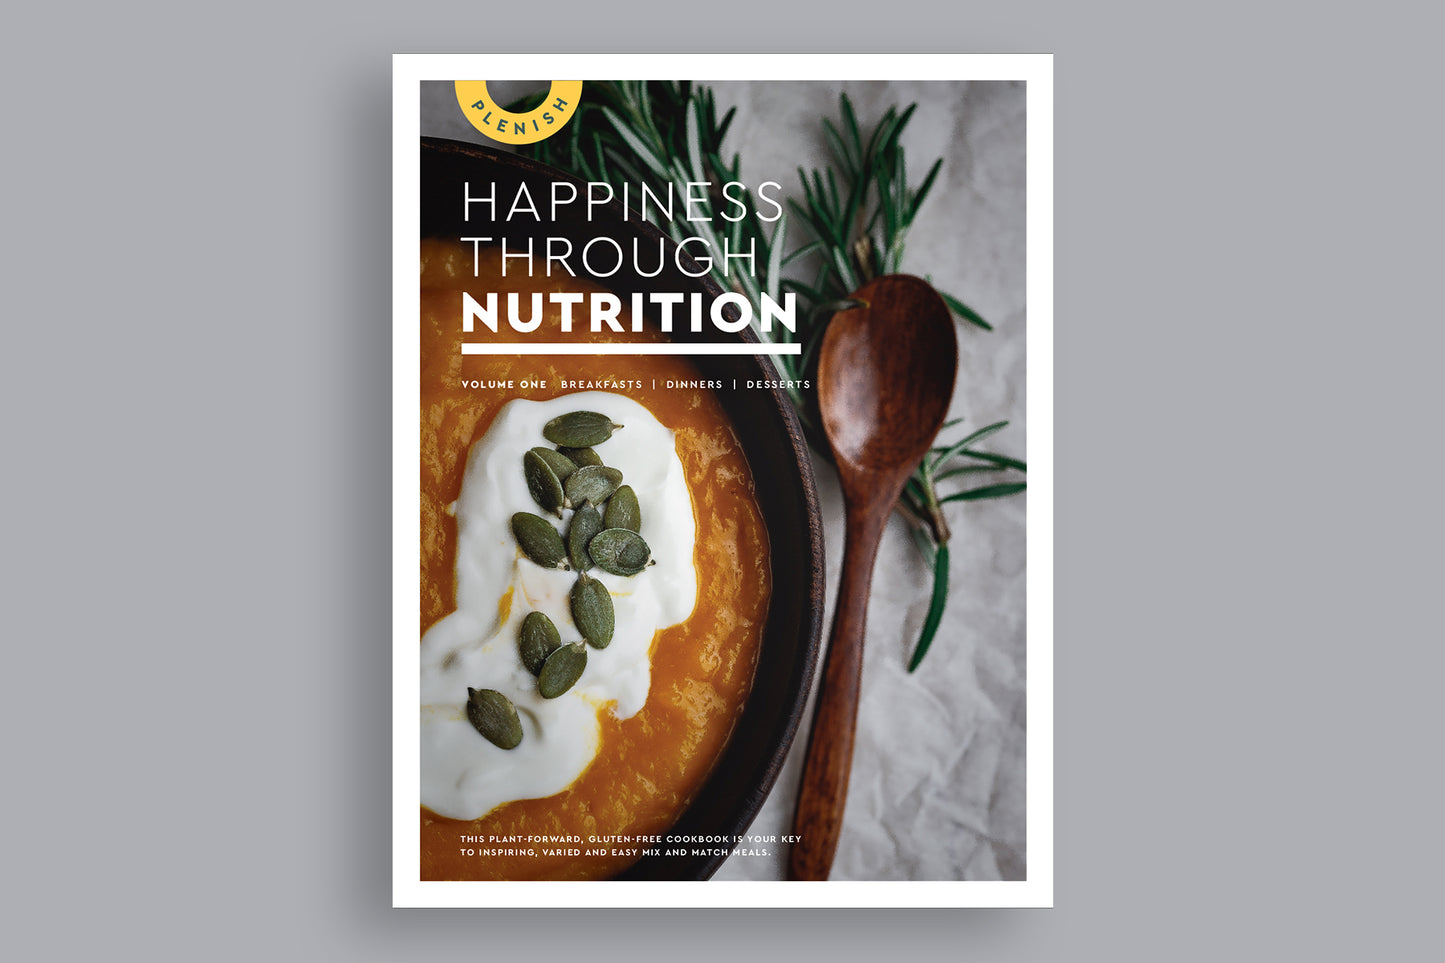 E cookbook - "Happiness through nutrition" Volume 1 - Breakfast, Dinners & Desserts